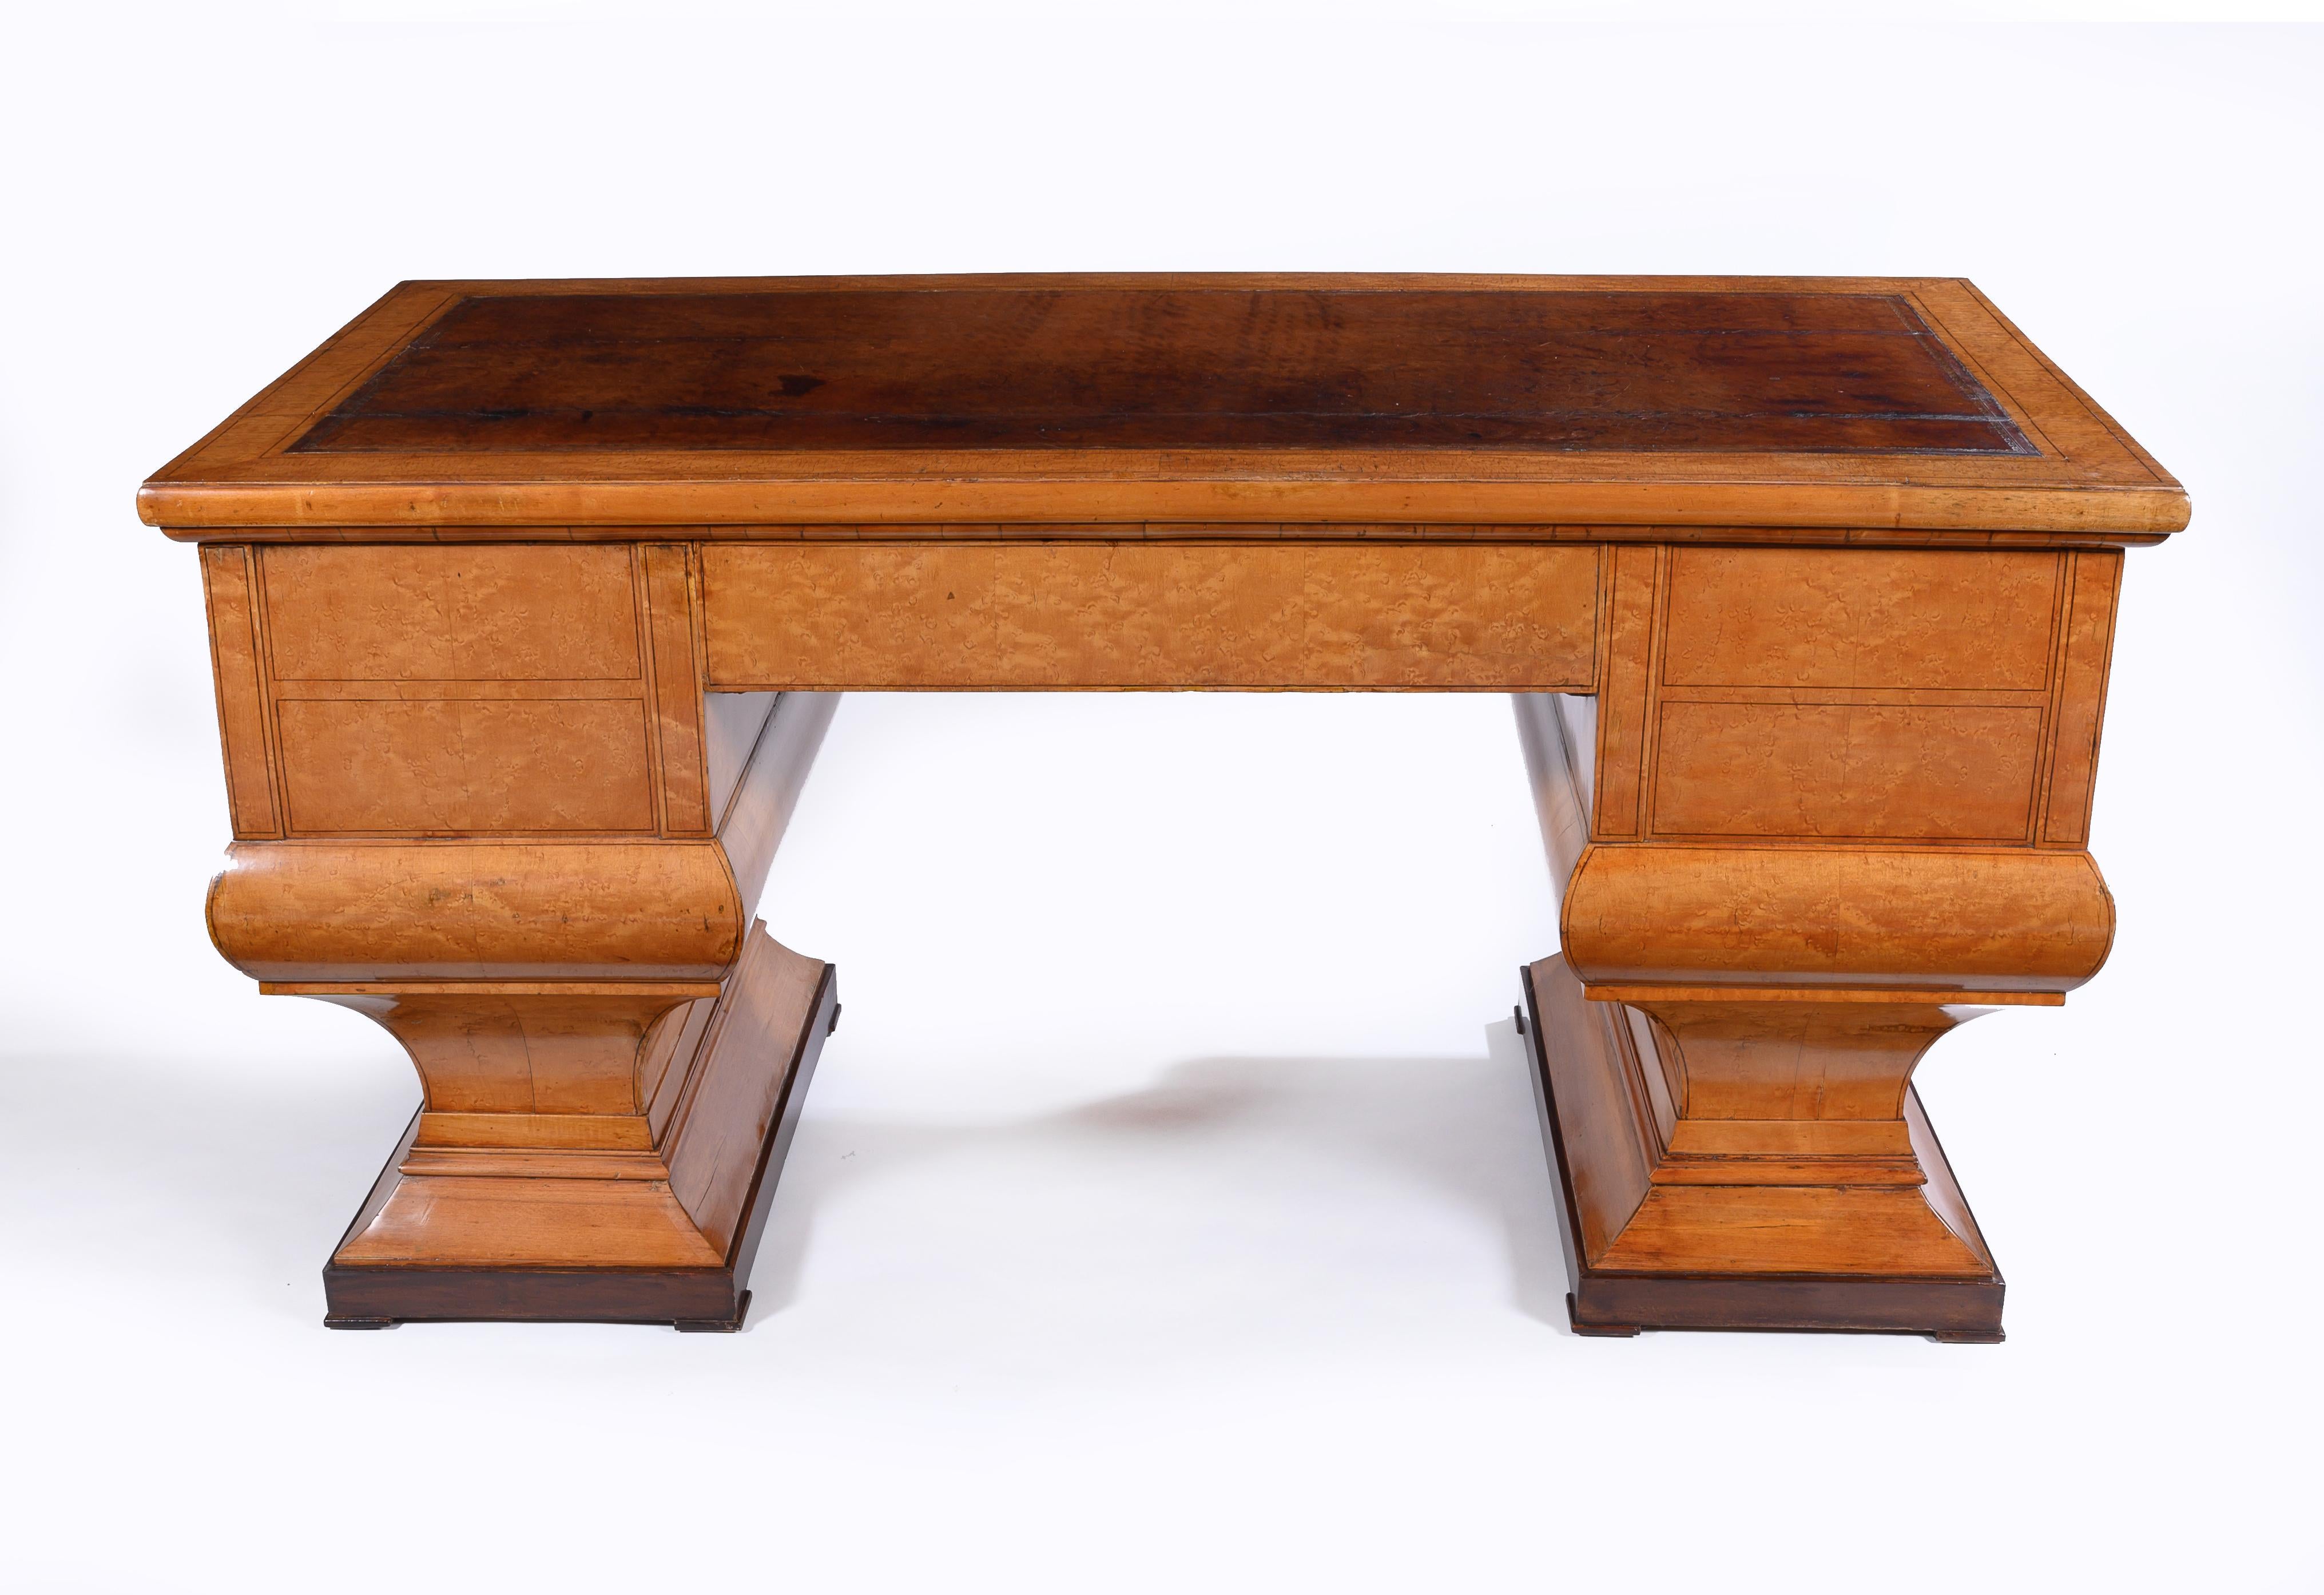 Rare Biedermeier Maple Wood Desk of Unusual Neoclassical Form, Vienna 2